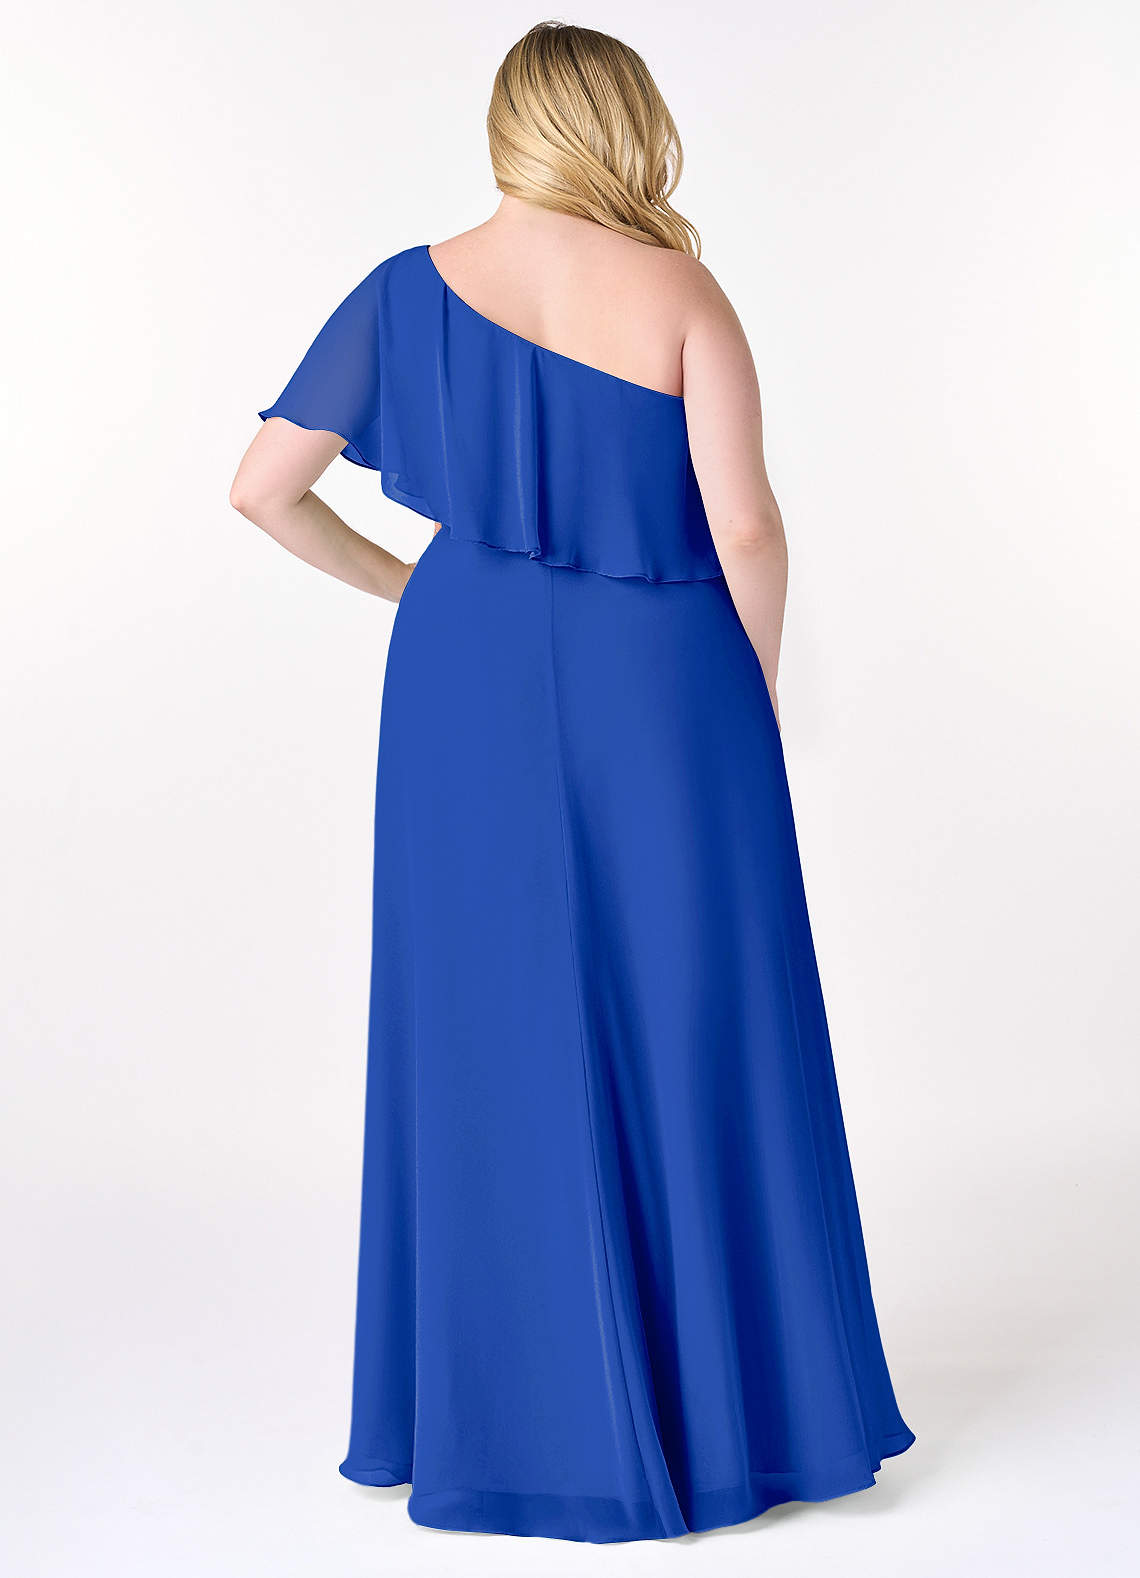 Azazie Lizzy Bridesmaid Dresses A-Line One Shoulder Chiffon Floor-Length Dress image1